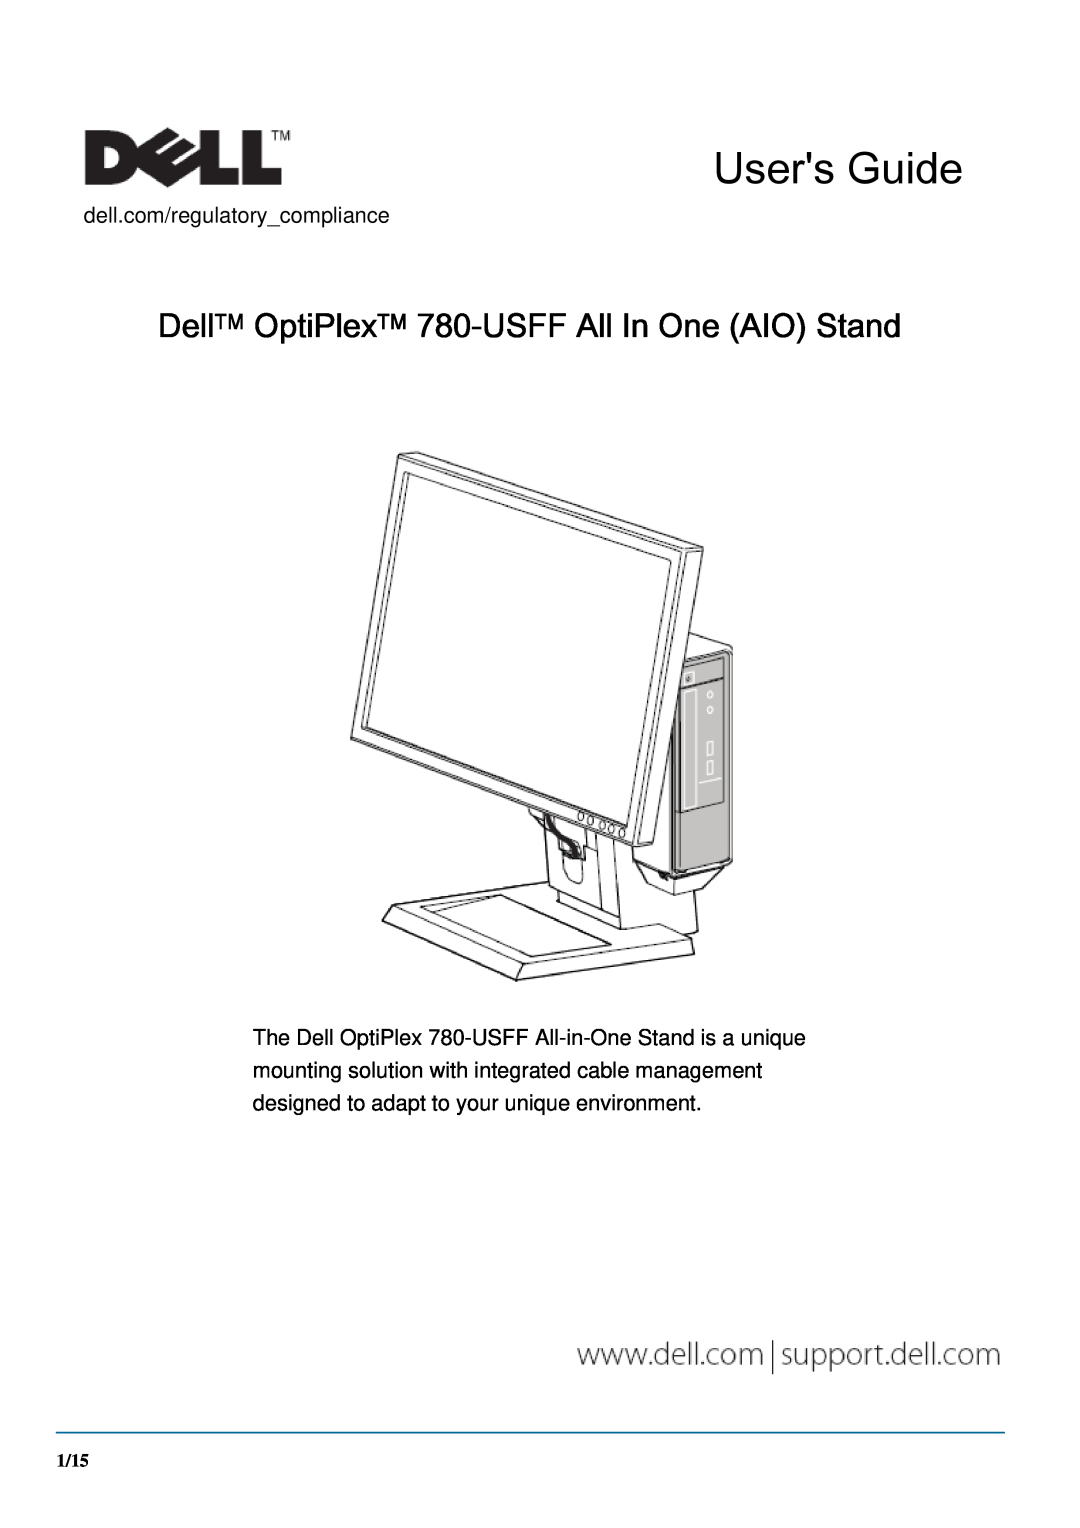 Dell ARAIO, 1909W, P2210 manual DellTM OptiPlexTM 780-USFF All In One AIO Stand, Users Guide, 1/15 